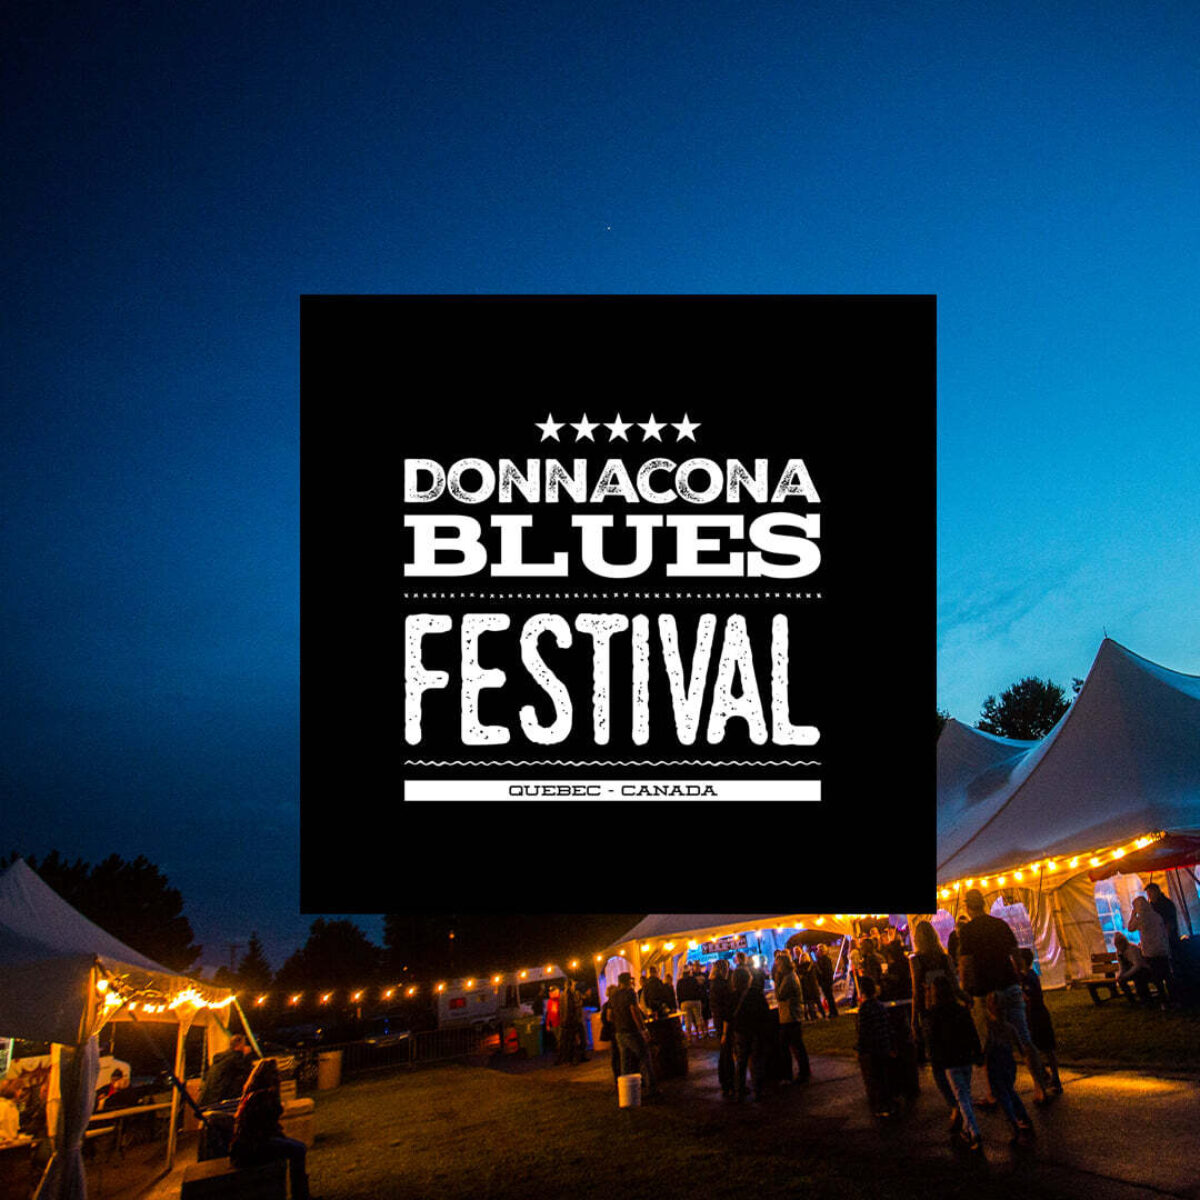 Donnacona blues